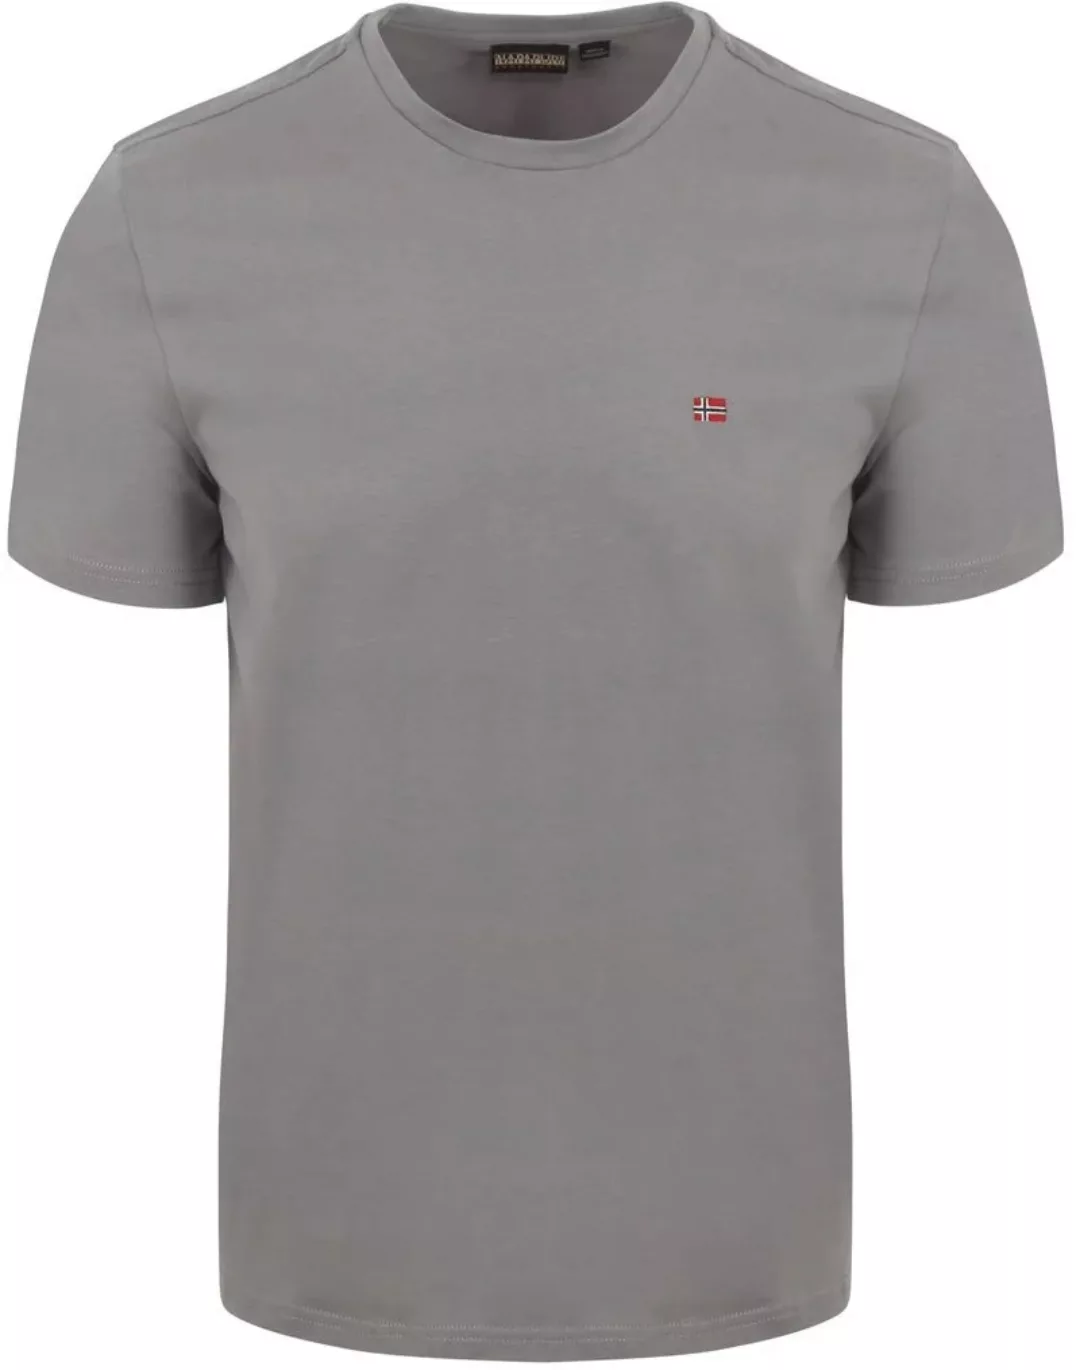 Napapijri Salis T-shirt Mid Grau - Größe XL günstig online kaufen